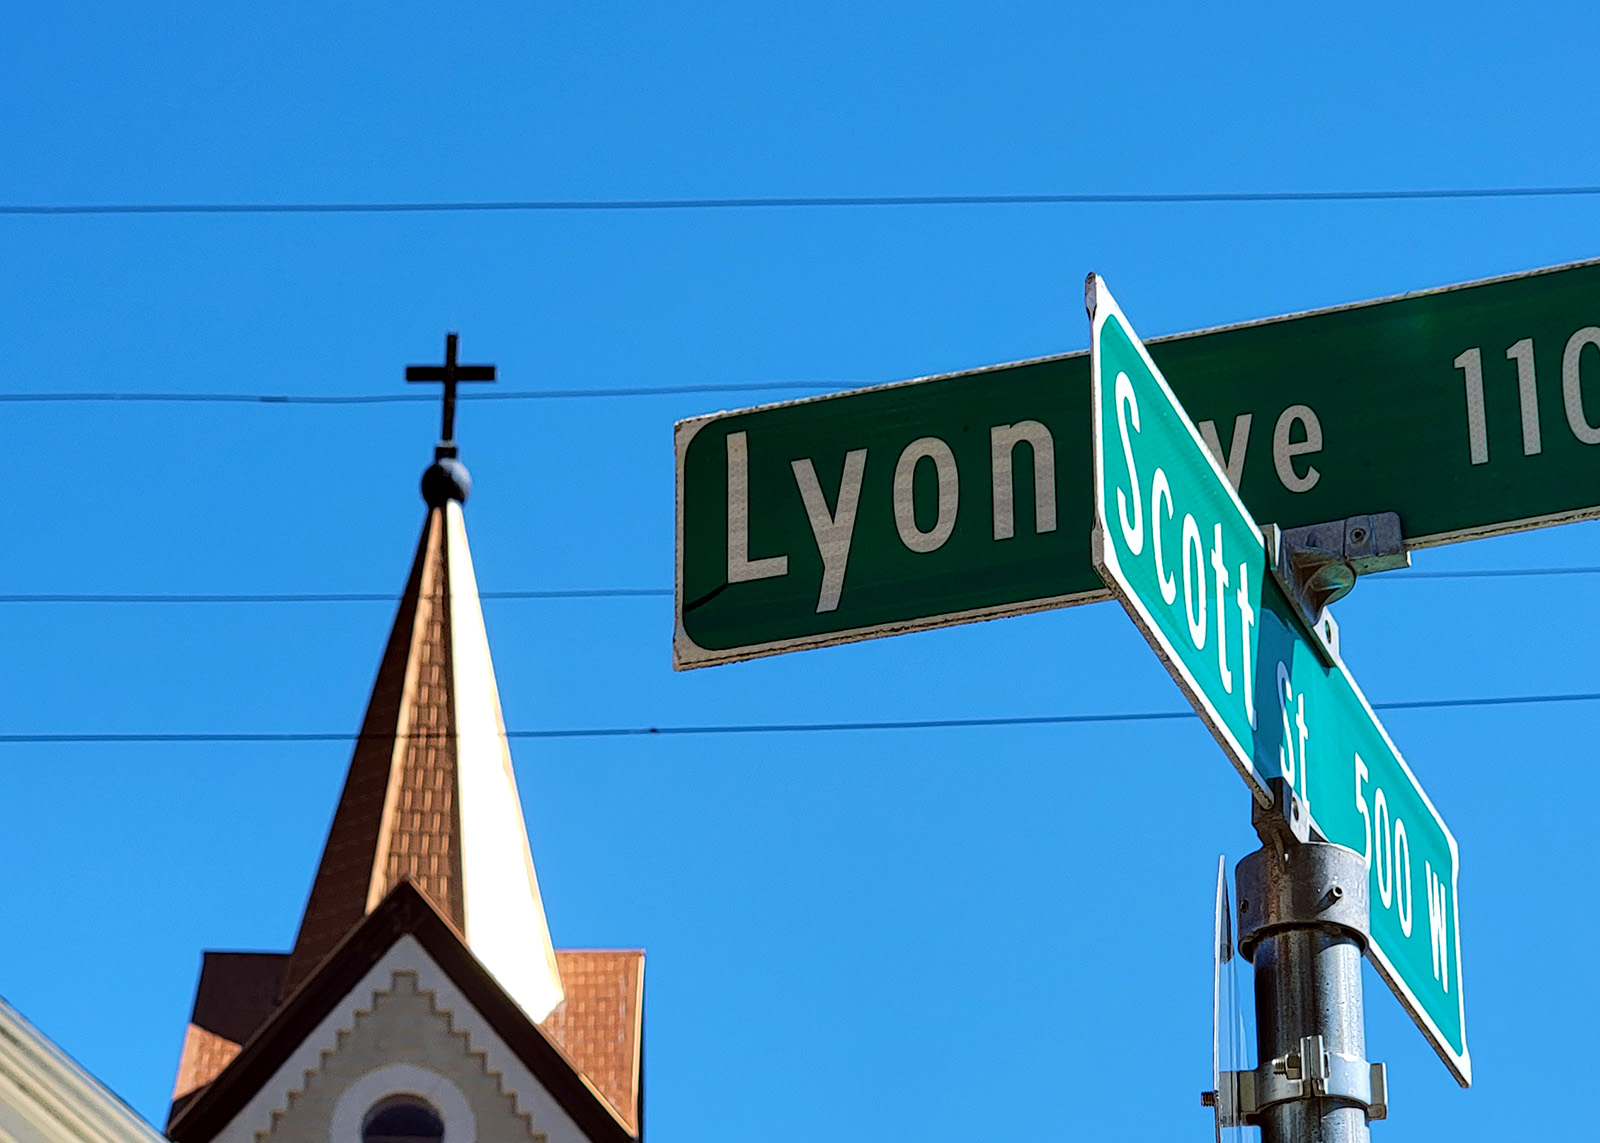 Lyon Avenue street sign